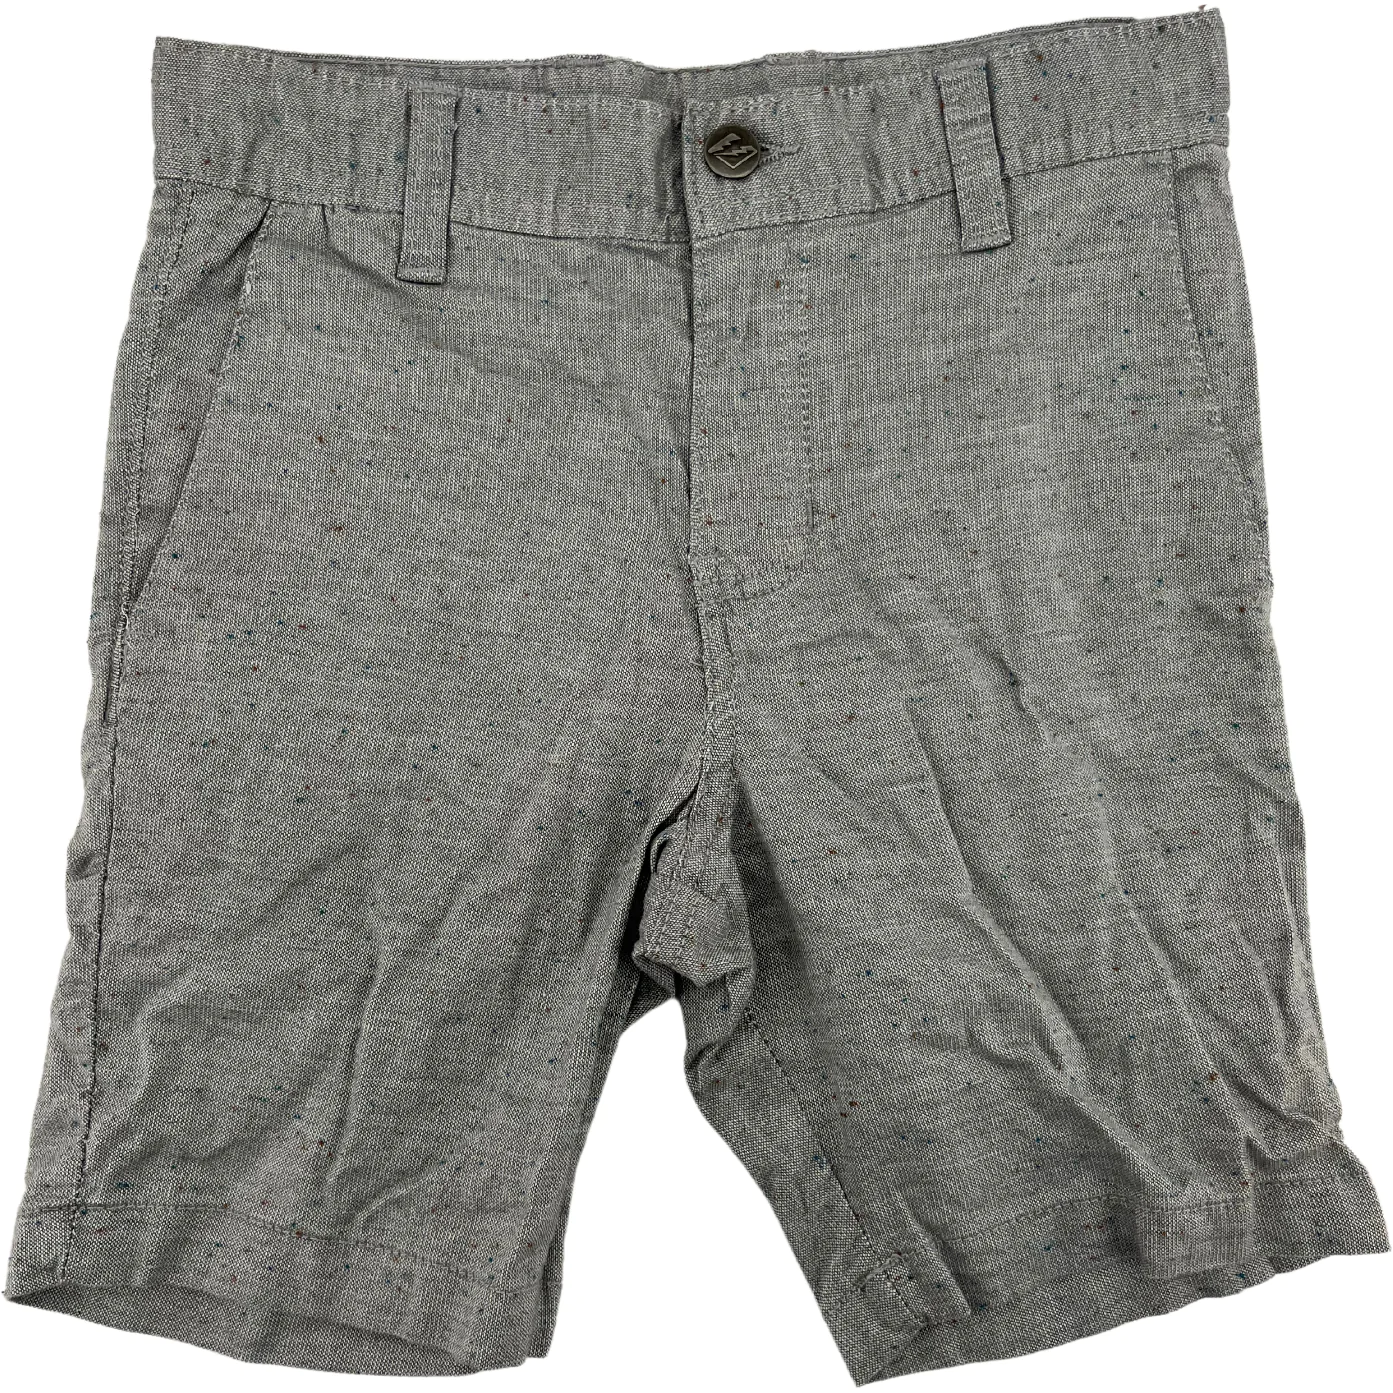 Amplify Children's Shorts / Boy's Summer Shorts / Grey / Size 8